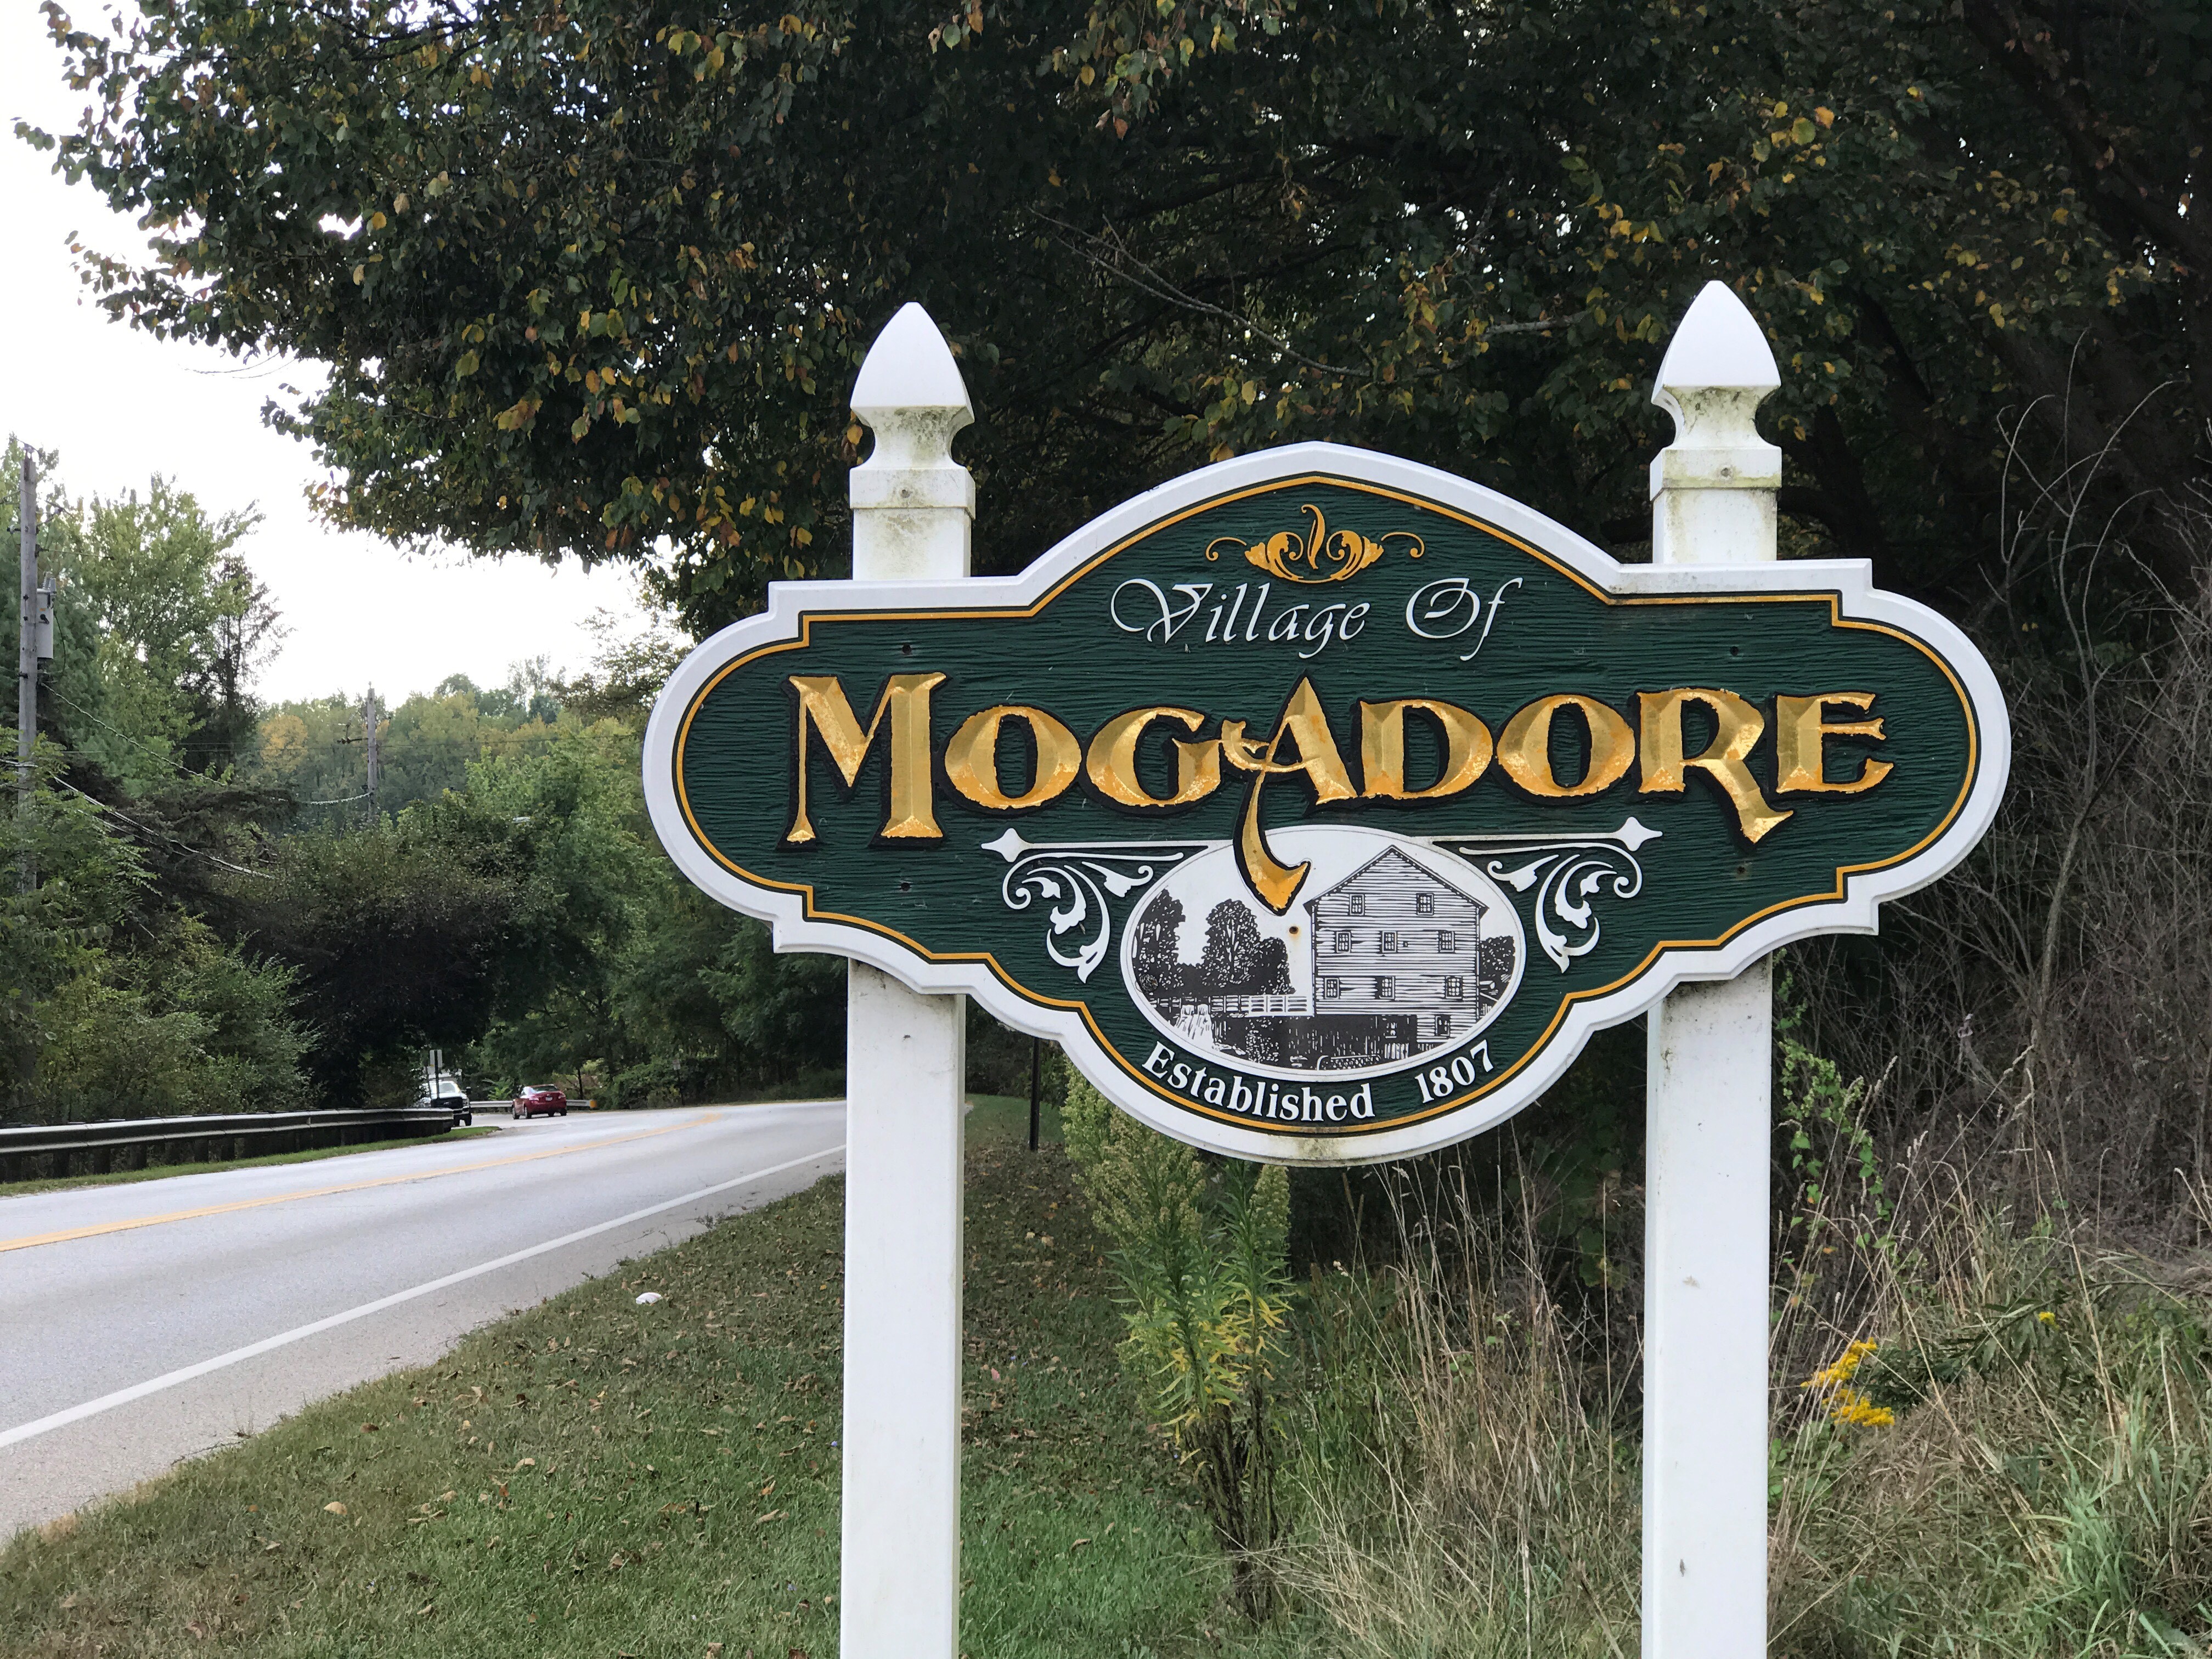 The Village of Mogadore Established 1807